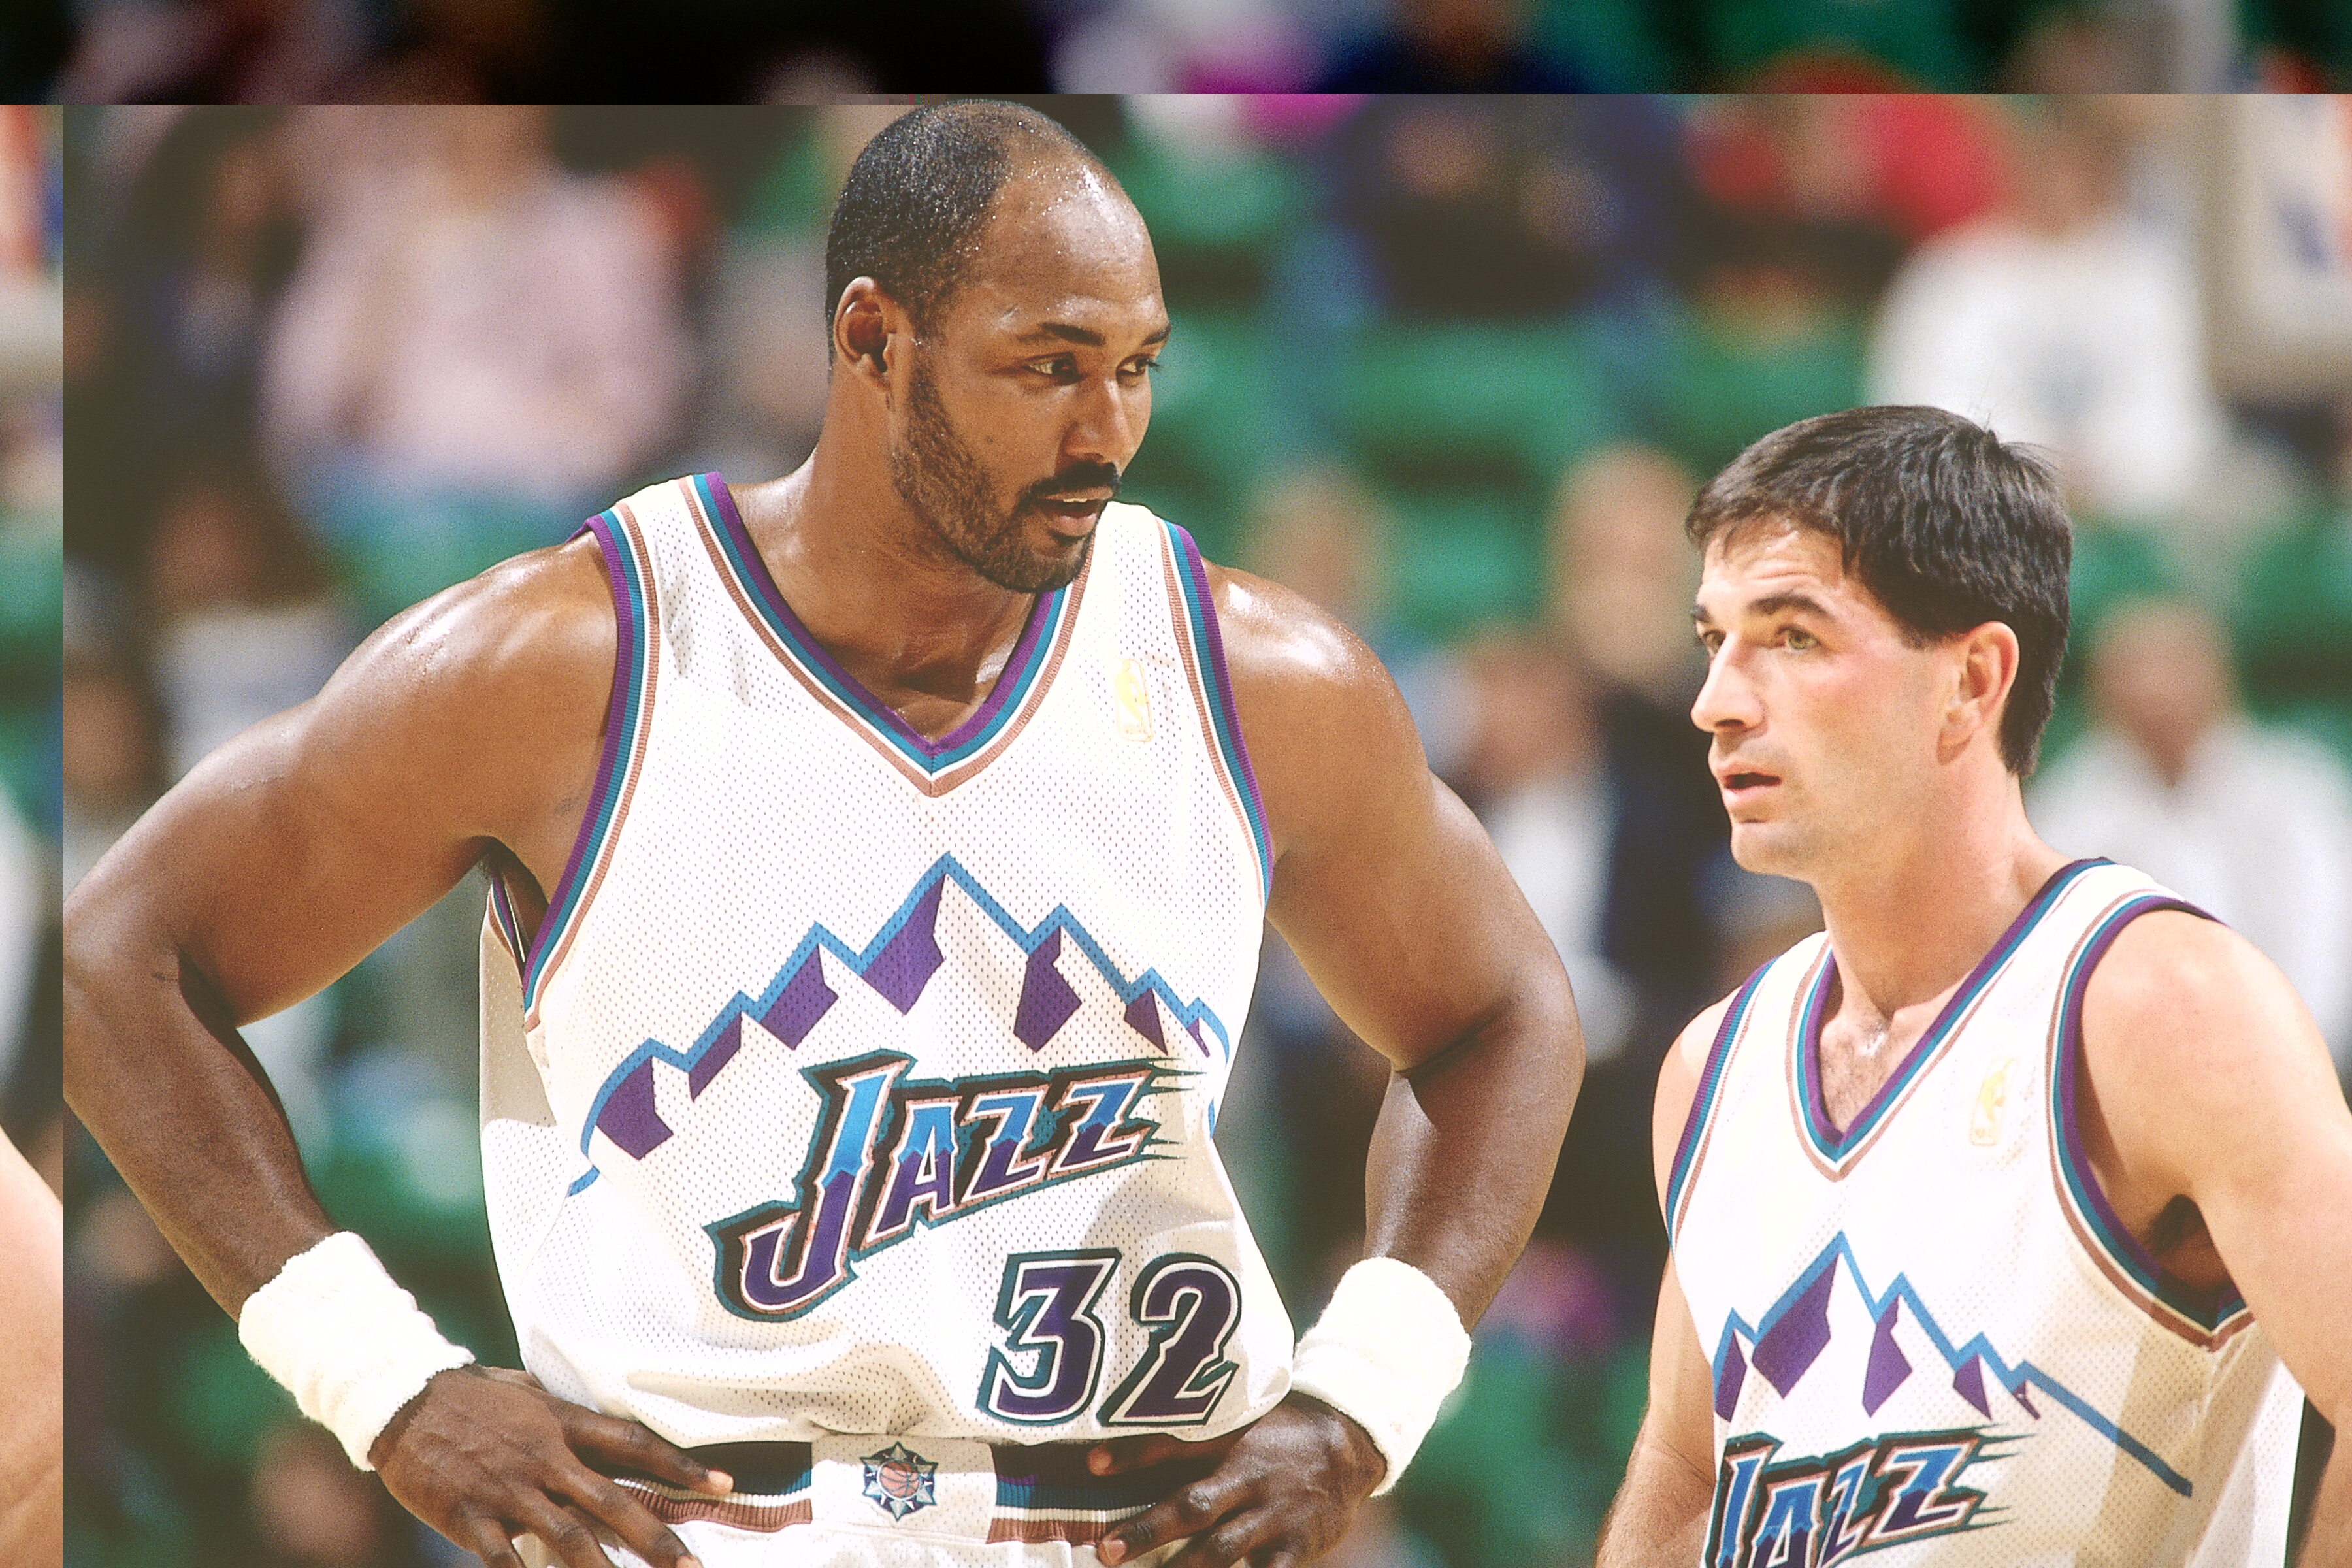 Utah Jazz greats Karl Malone and John Stockton talk during an NBA game in 1997